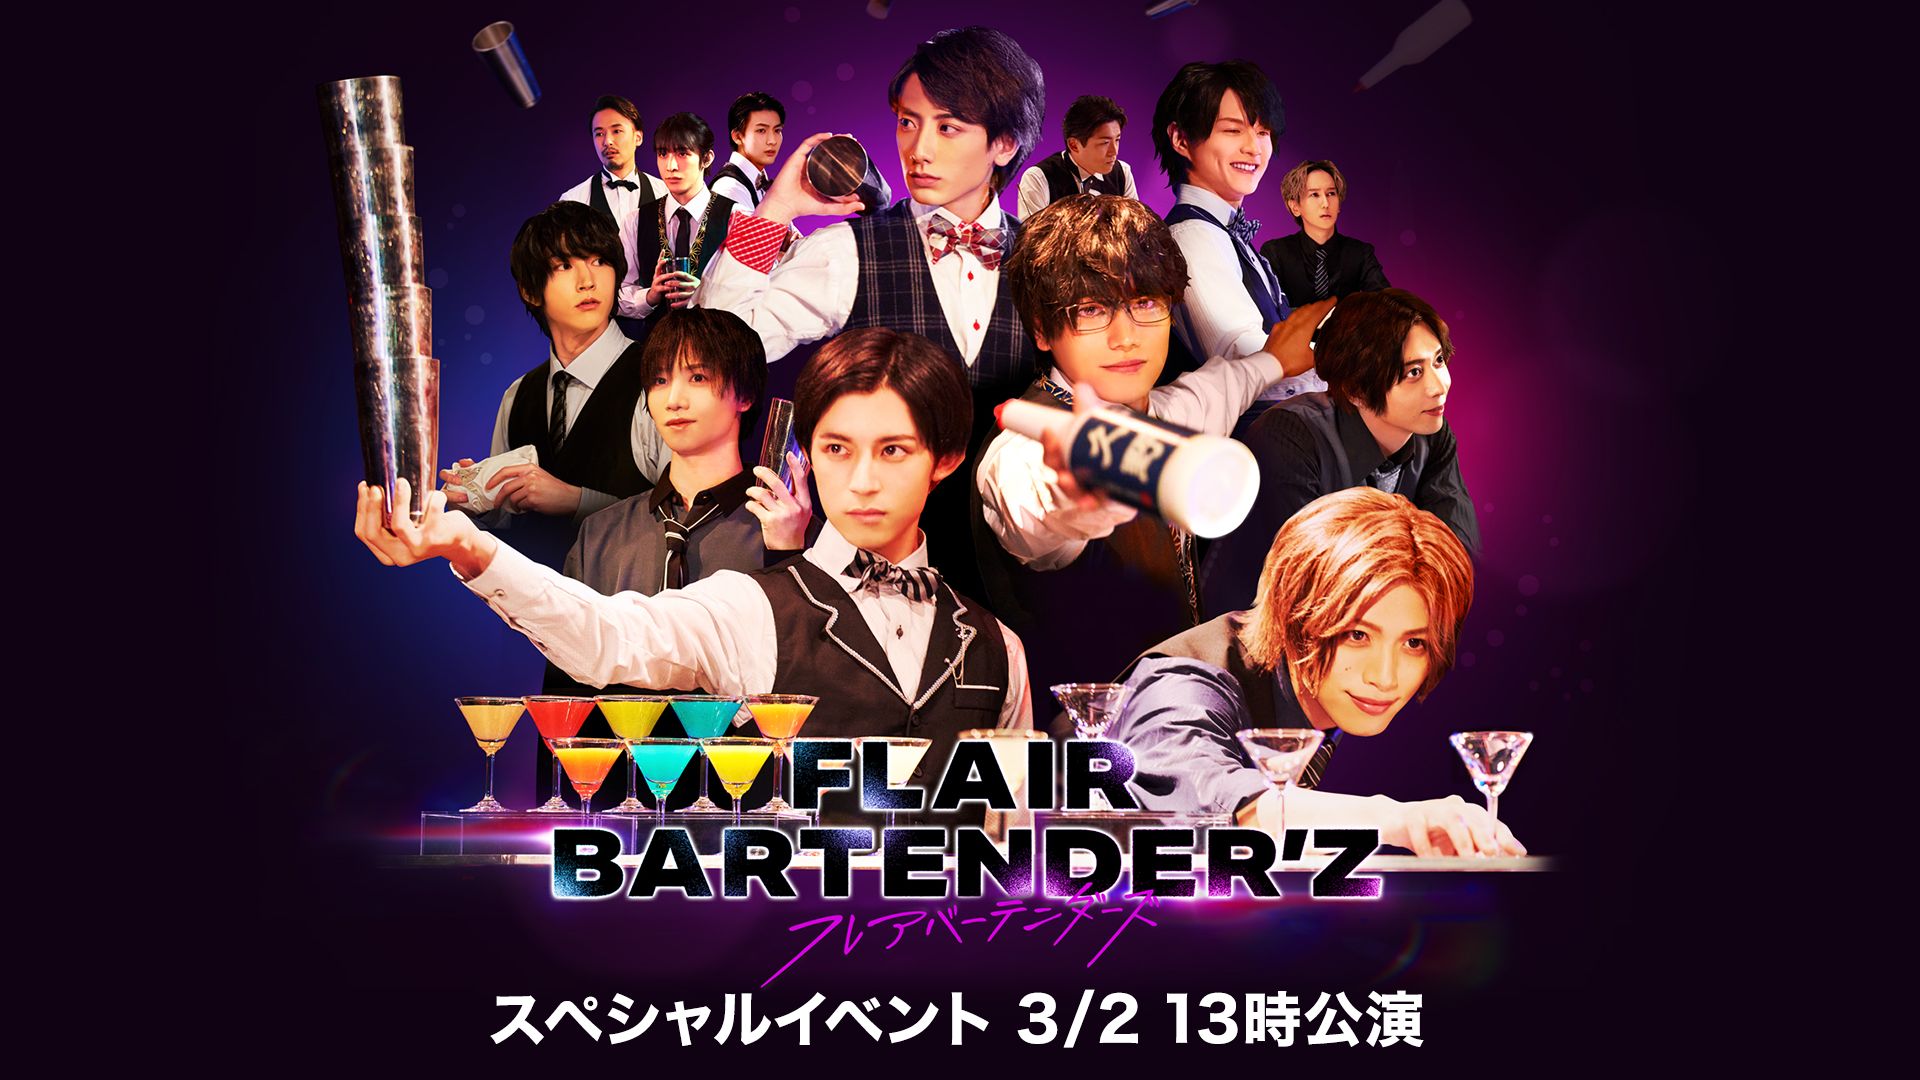 FLAIR BARTENDER’Zスペシャルイベント 3/2 13時公演